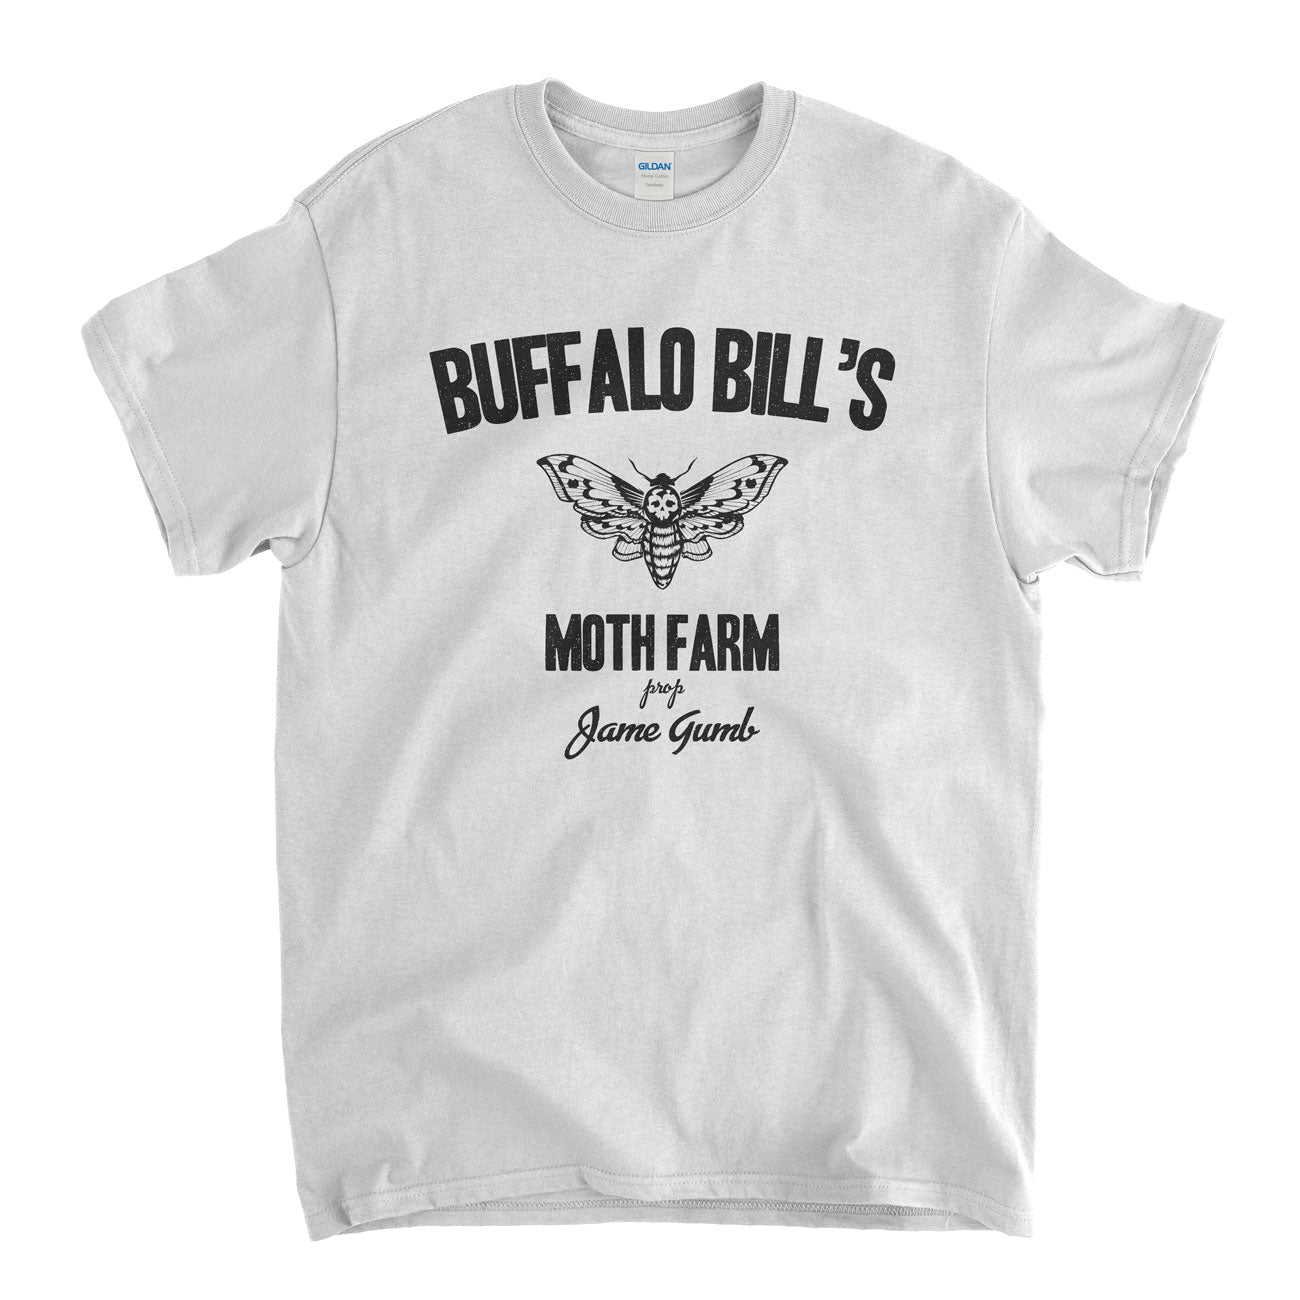 Buffalo Bill's Moth Farm T Shirt - An Old Skool Hooligans Movie Classic